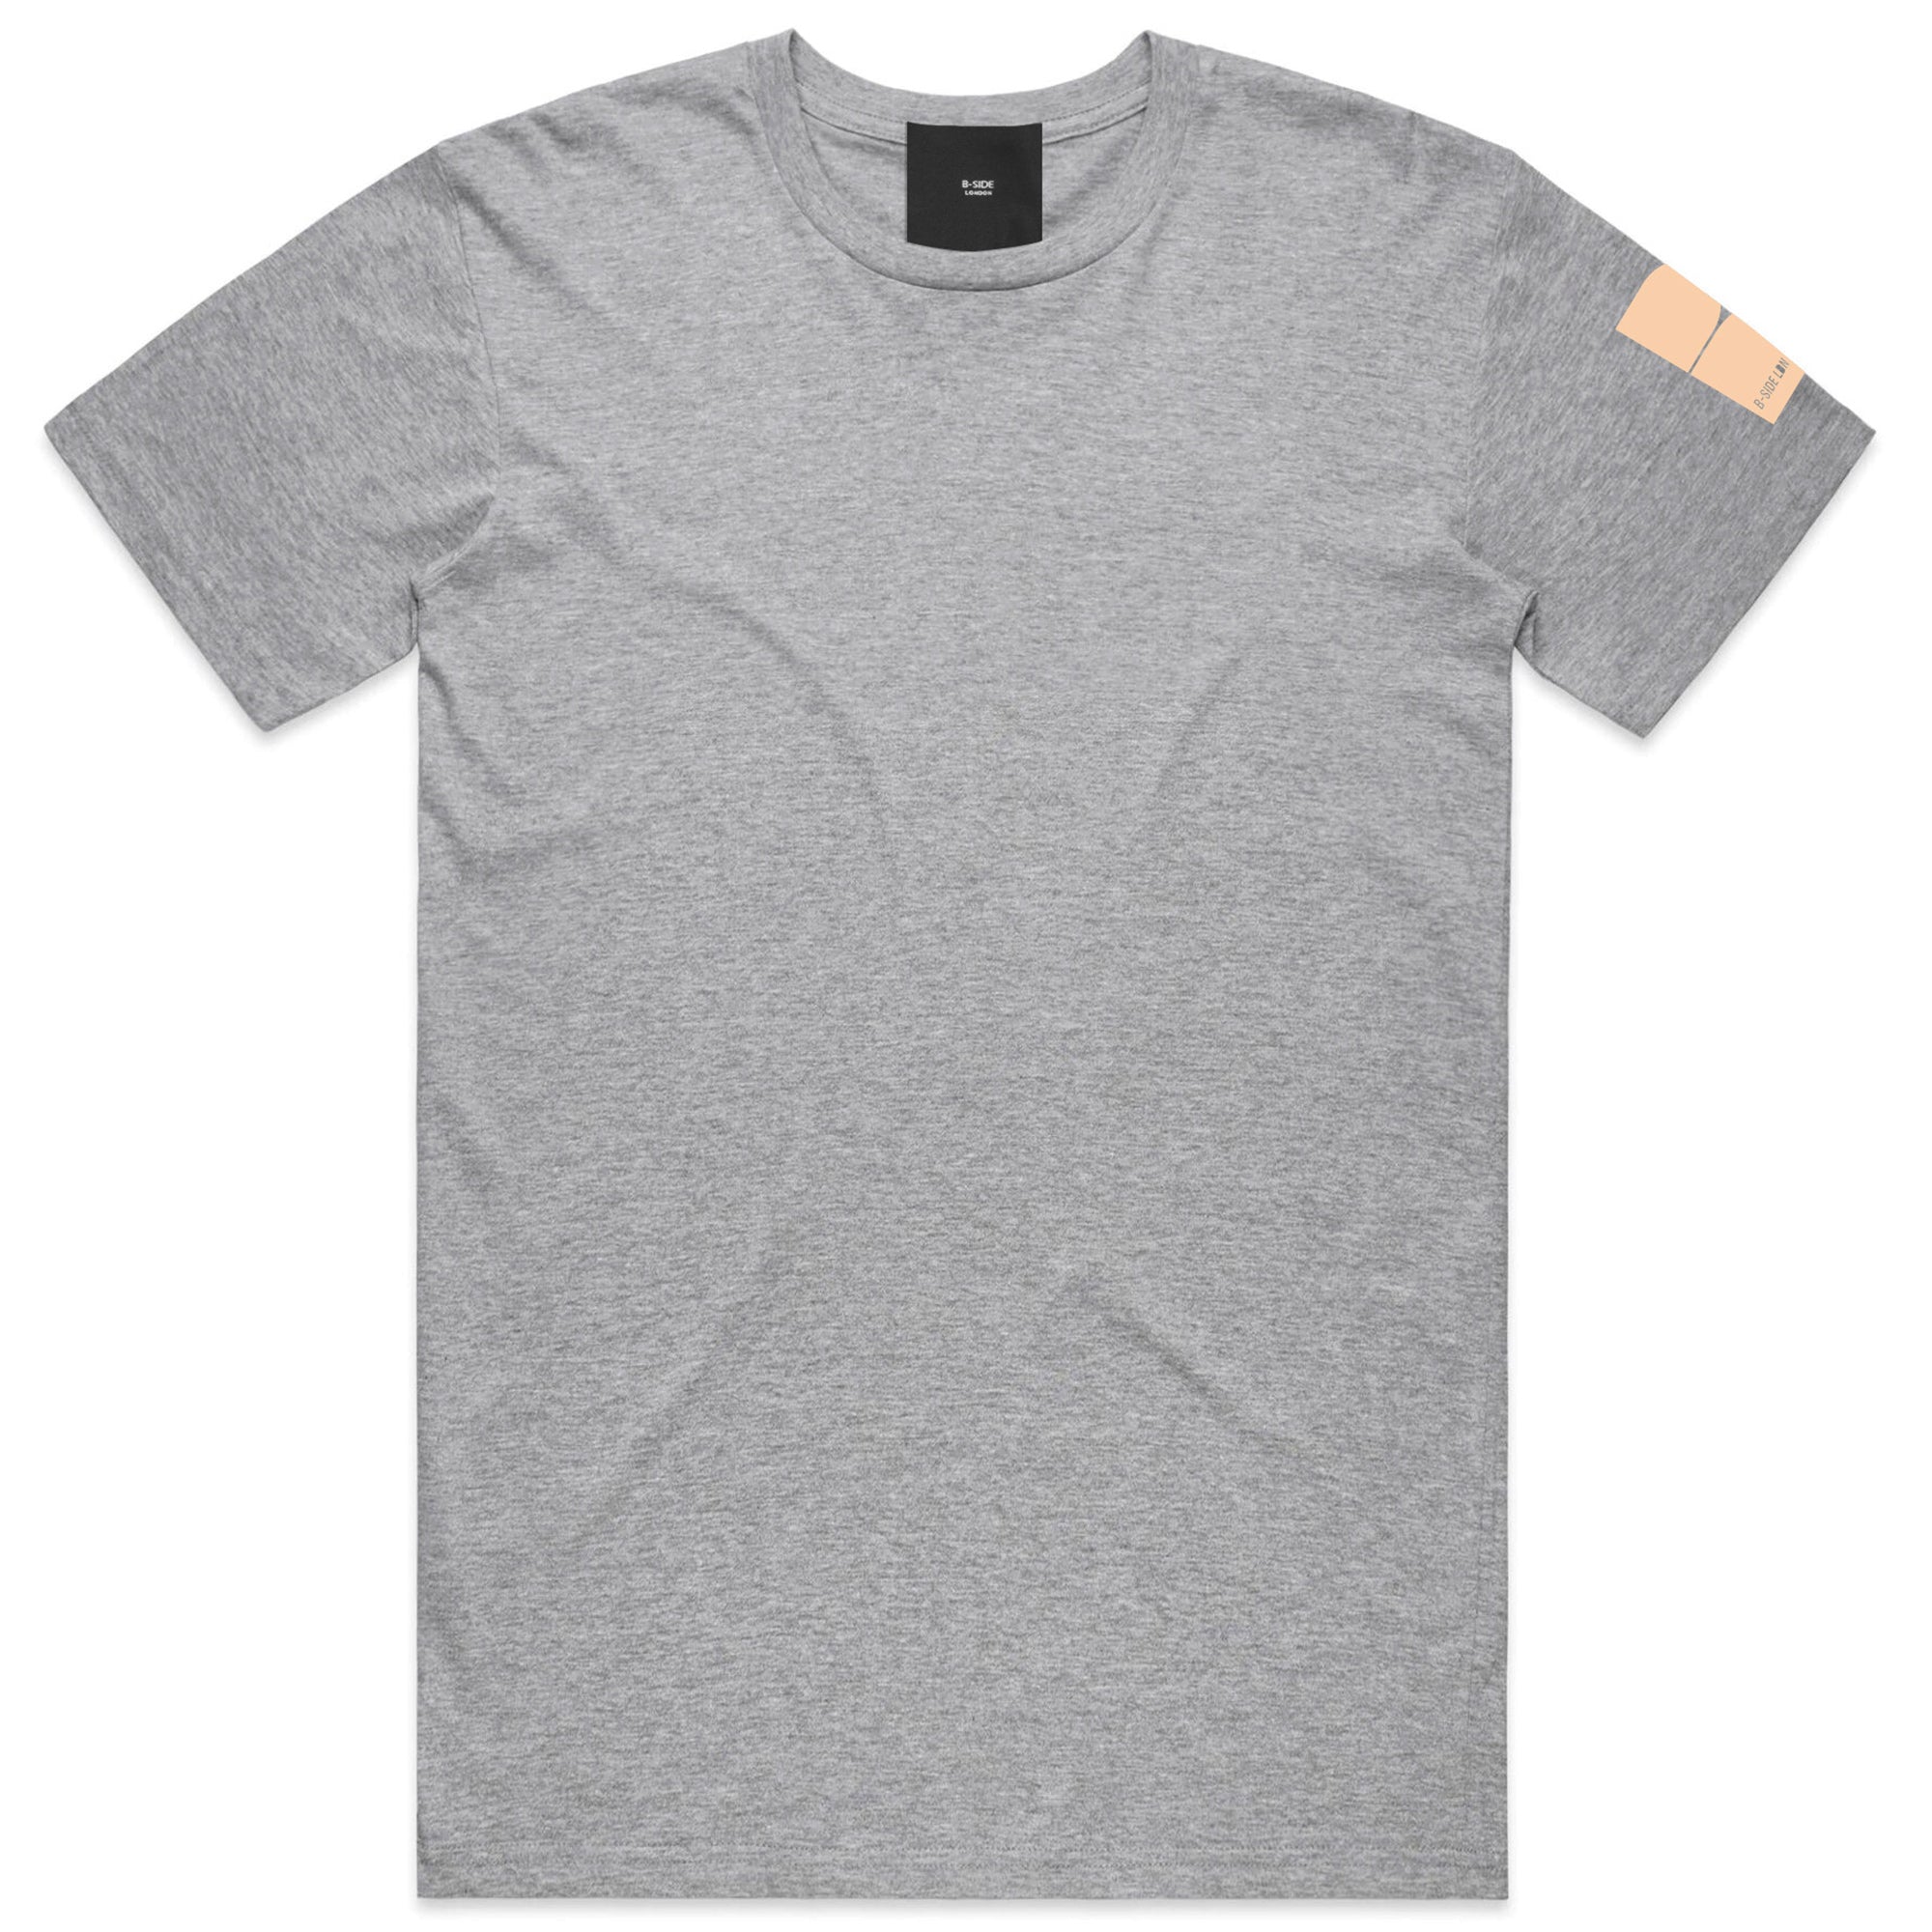 Grey Throwback Graff T-Shirt - Mustard Print